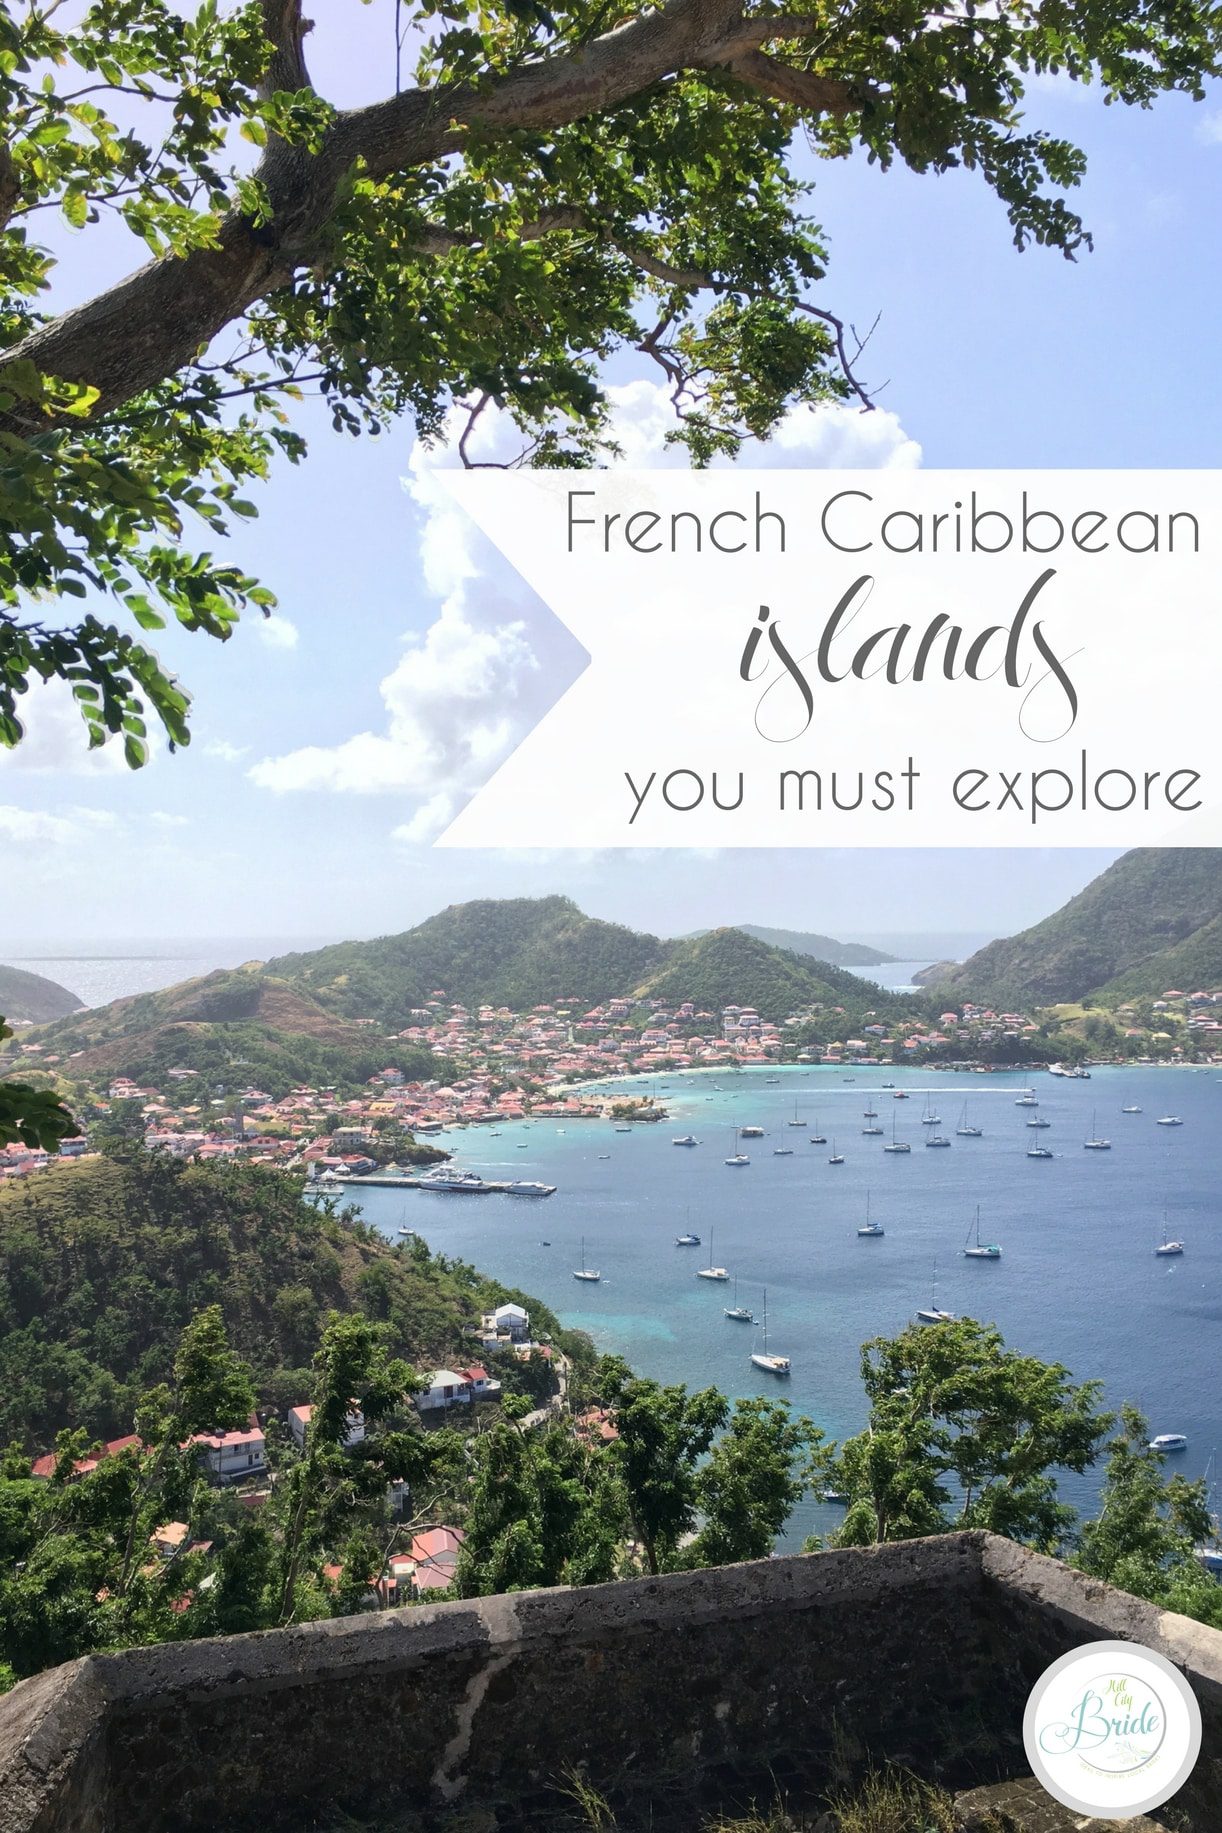 French Caribbean Islands Windstar Cruises | Hill City Bride Virginia Wedding Blog